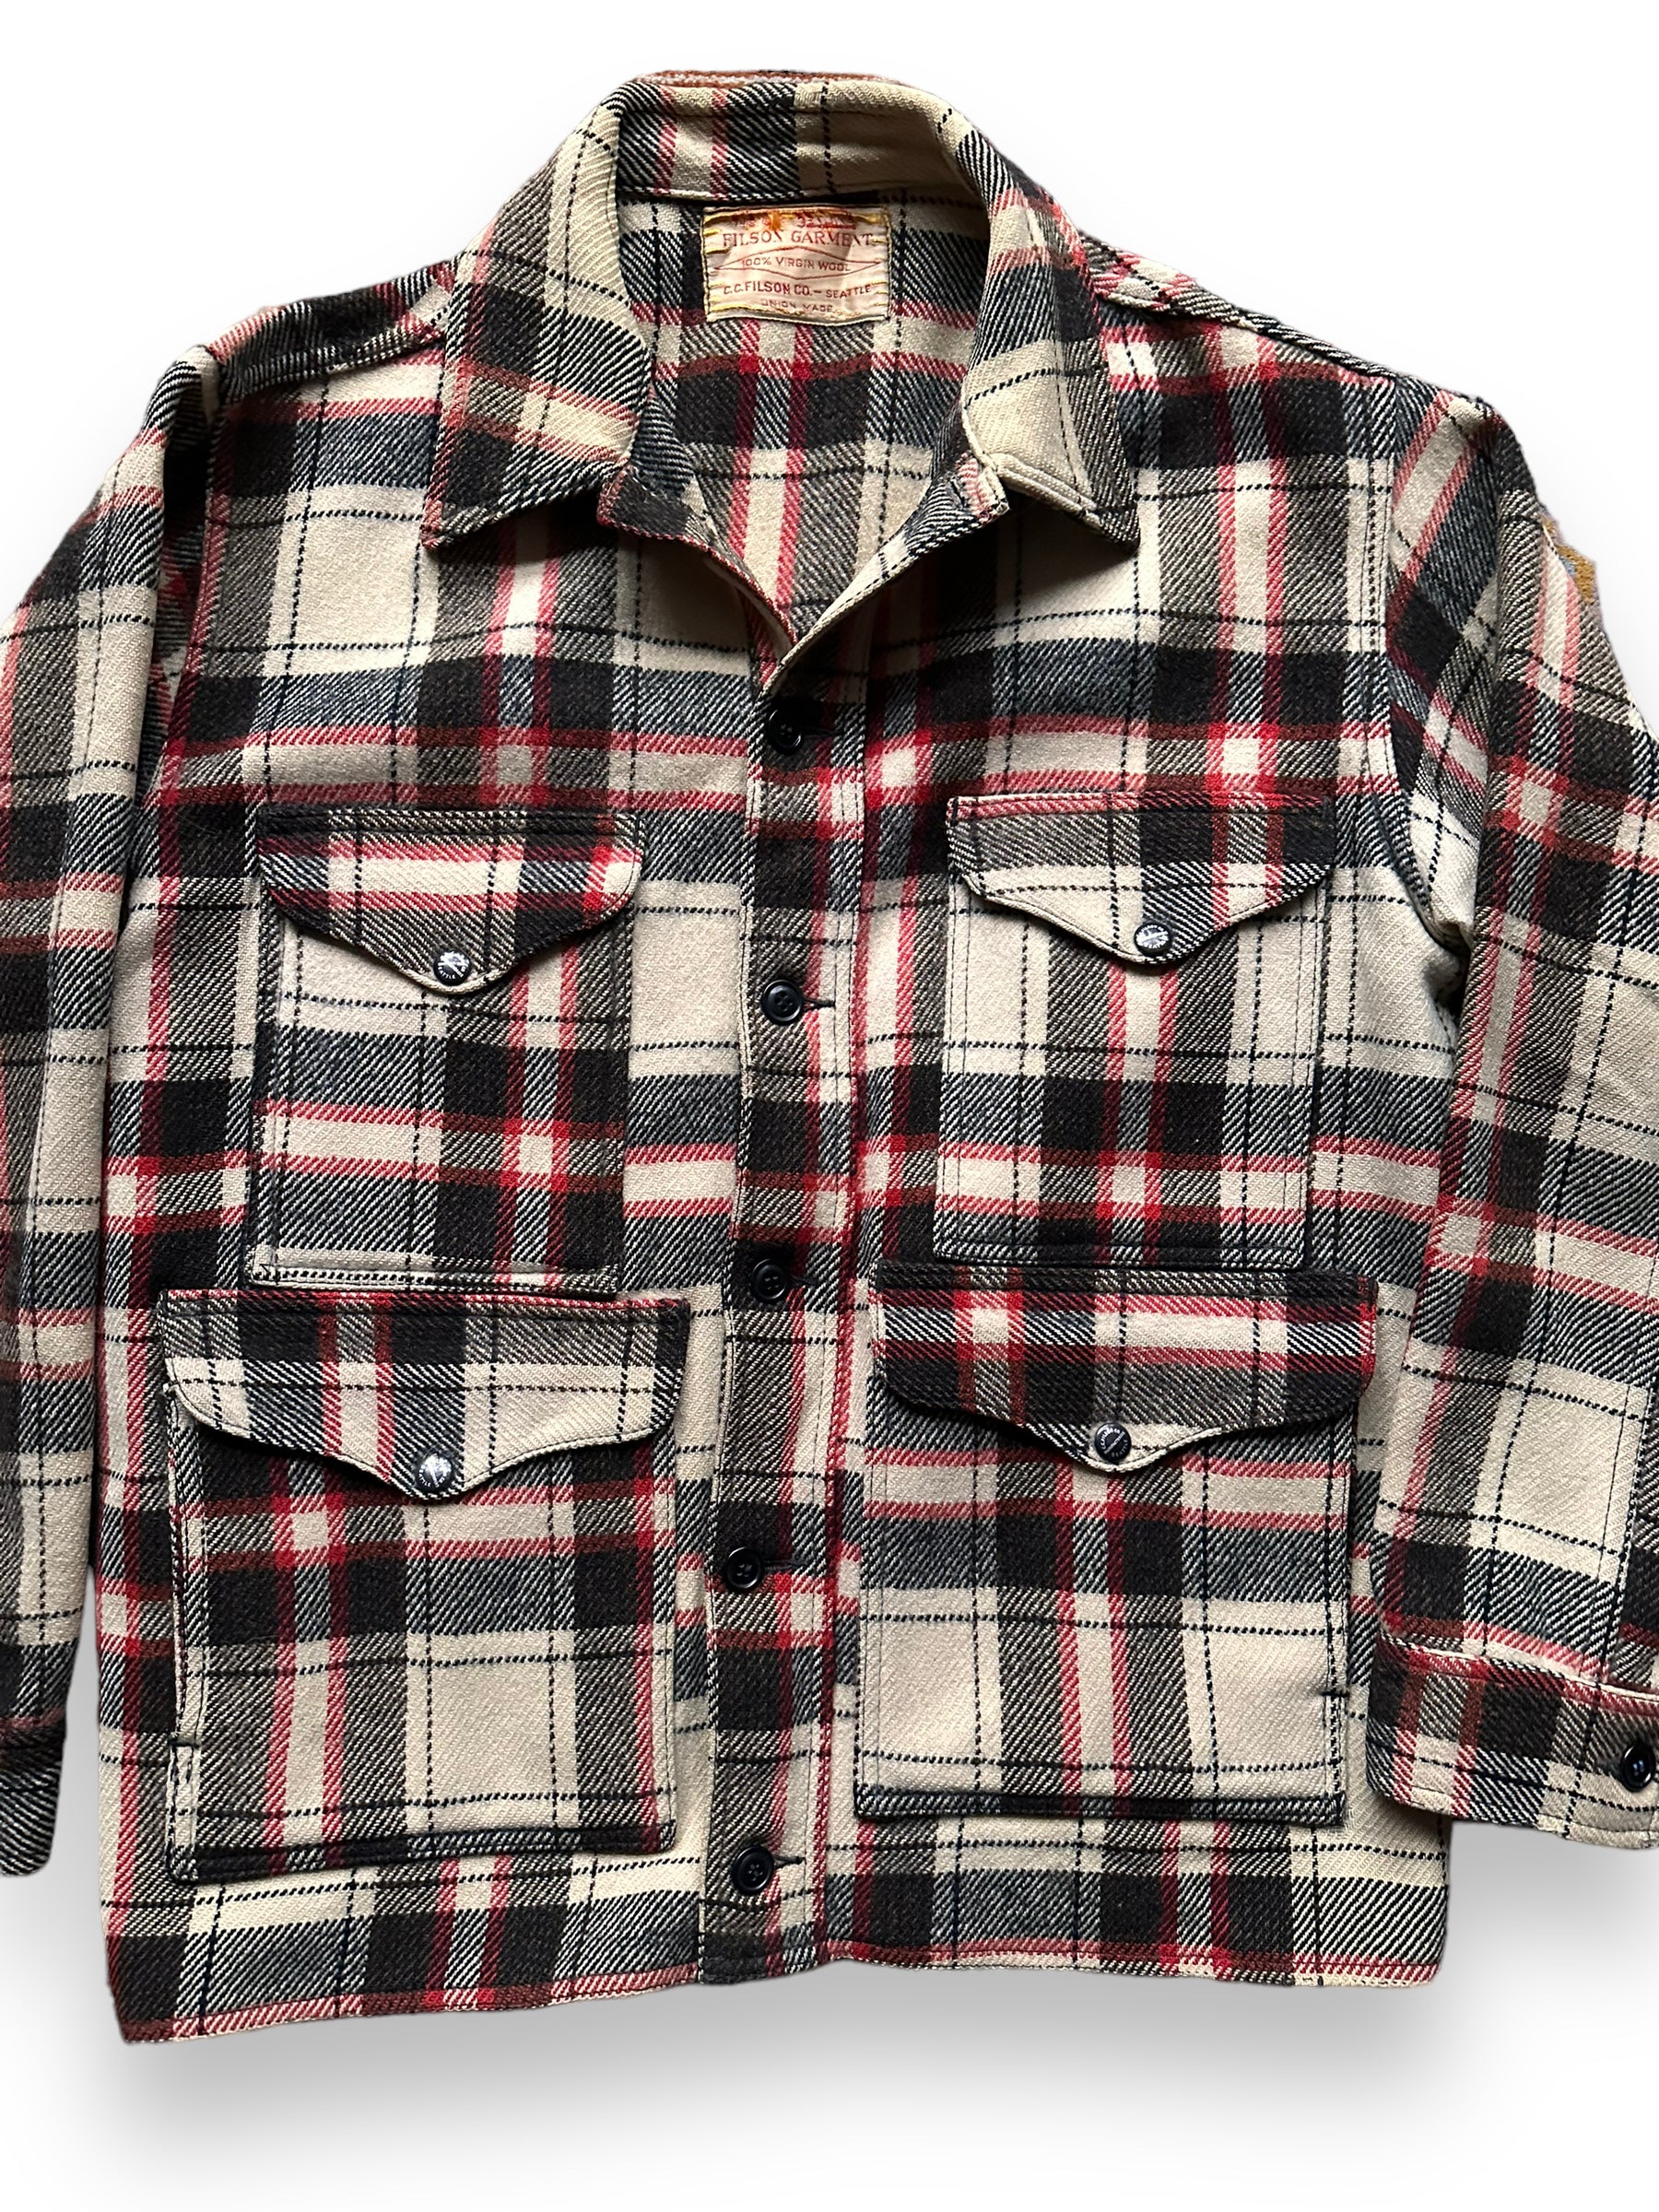 Extremely Rare 1951 Filson Red-Black-White Single Back Mackinaw Coat SZ 46  | Vintage Filson Peppermint Patty Alternate | Vintage Workwear Seattle